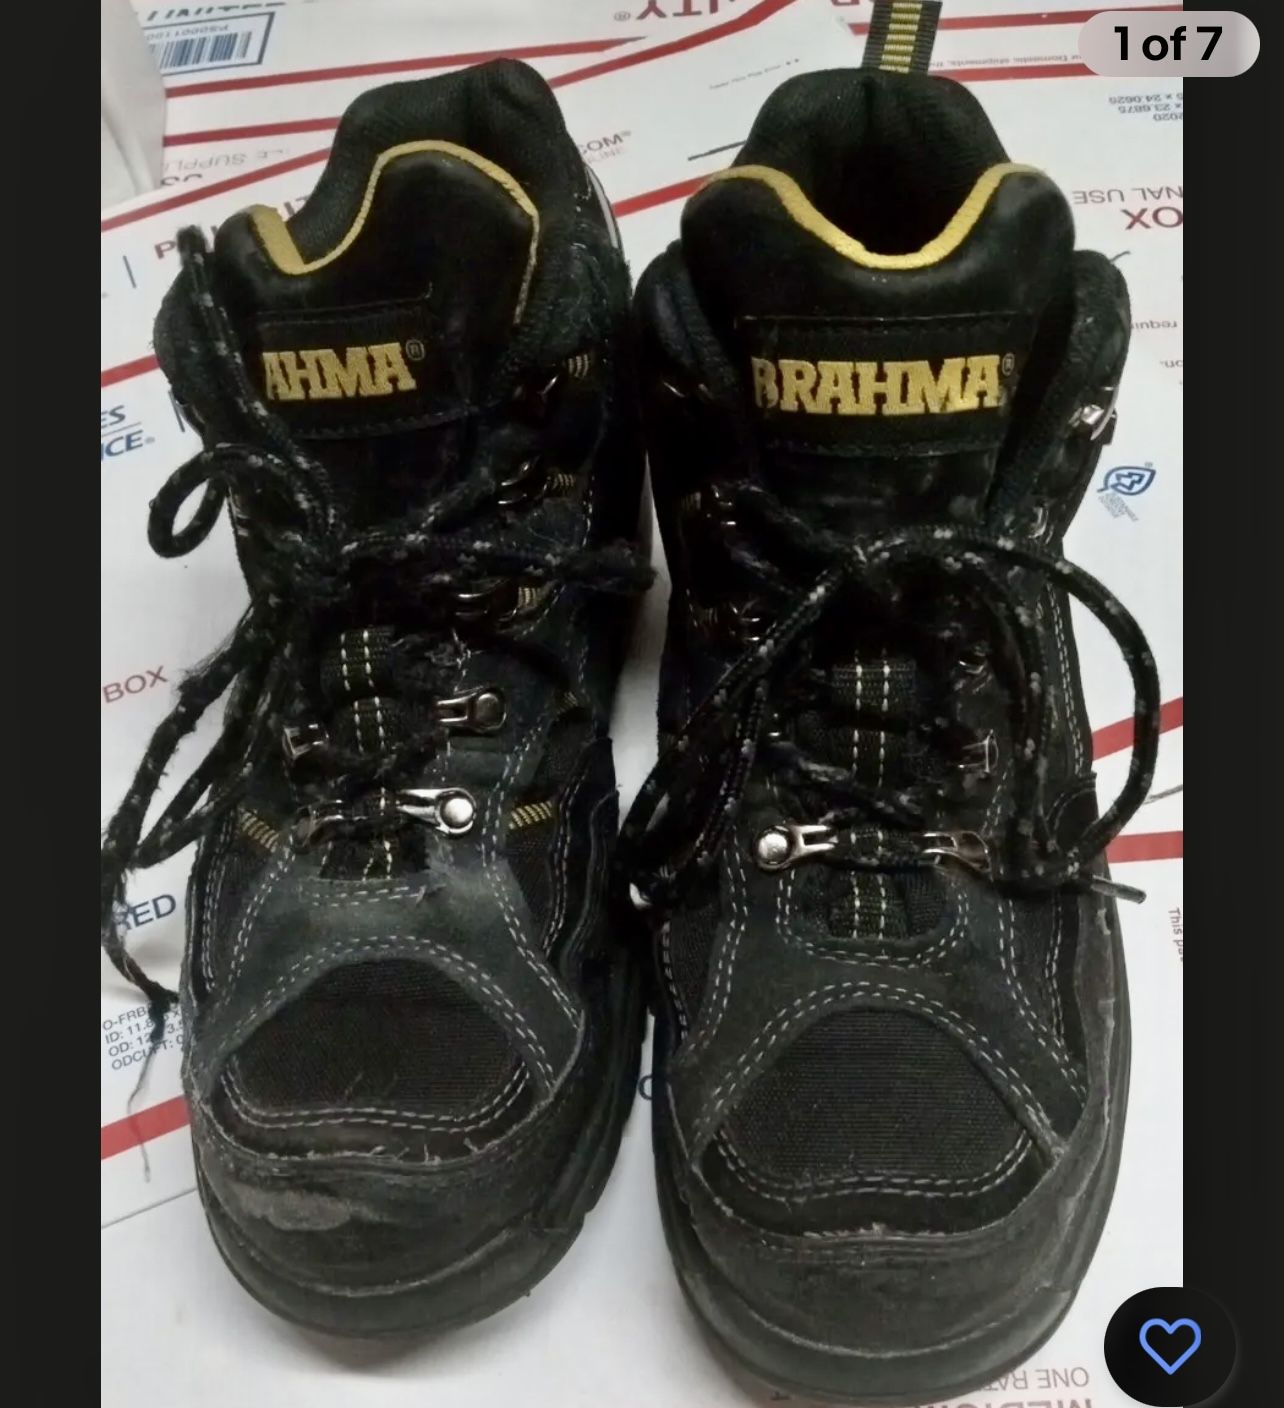 Brahma Steel Toe Suede Work Boots Mens 7 Black Yellow